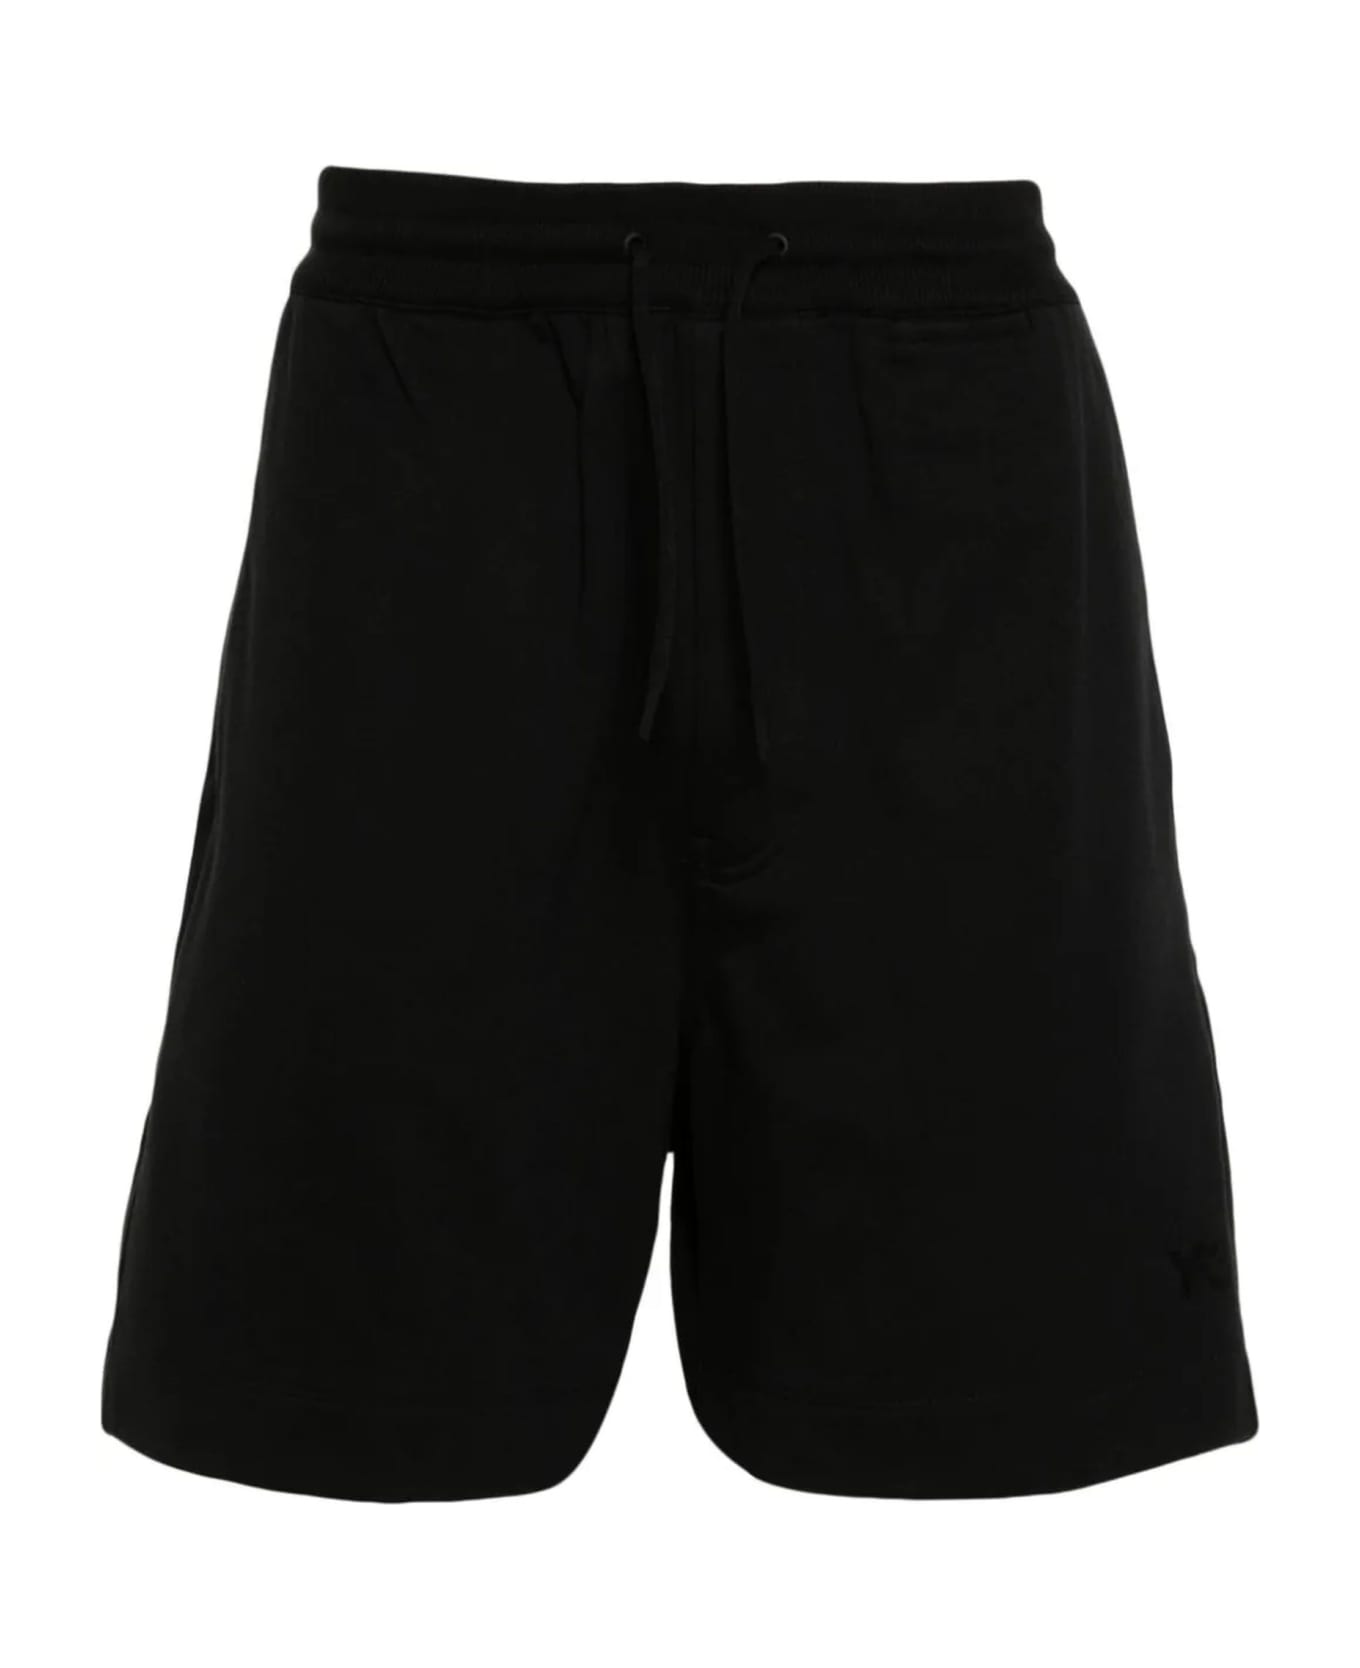 Y-3 Shorts Black - Black